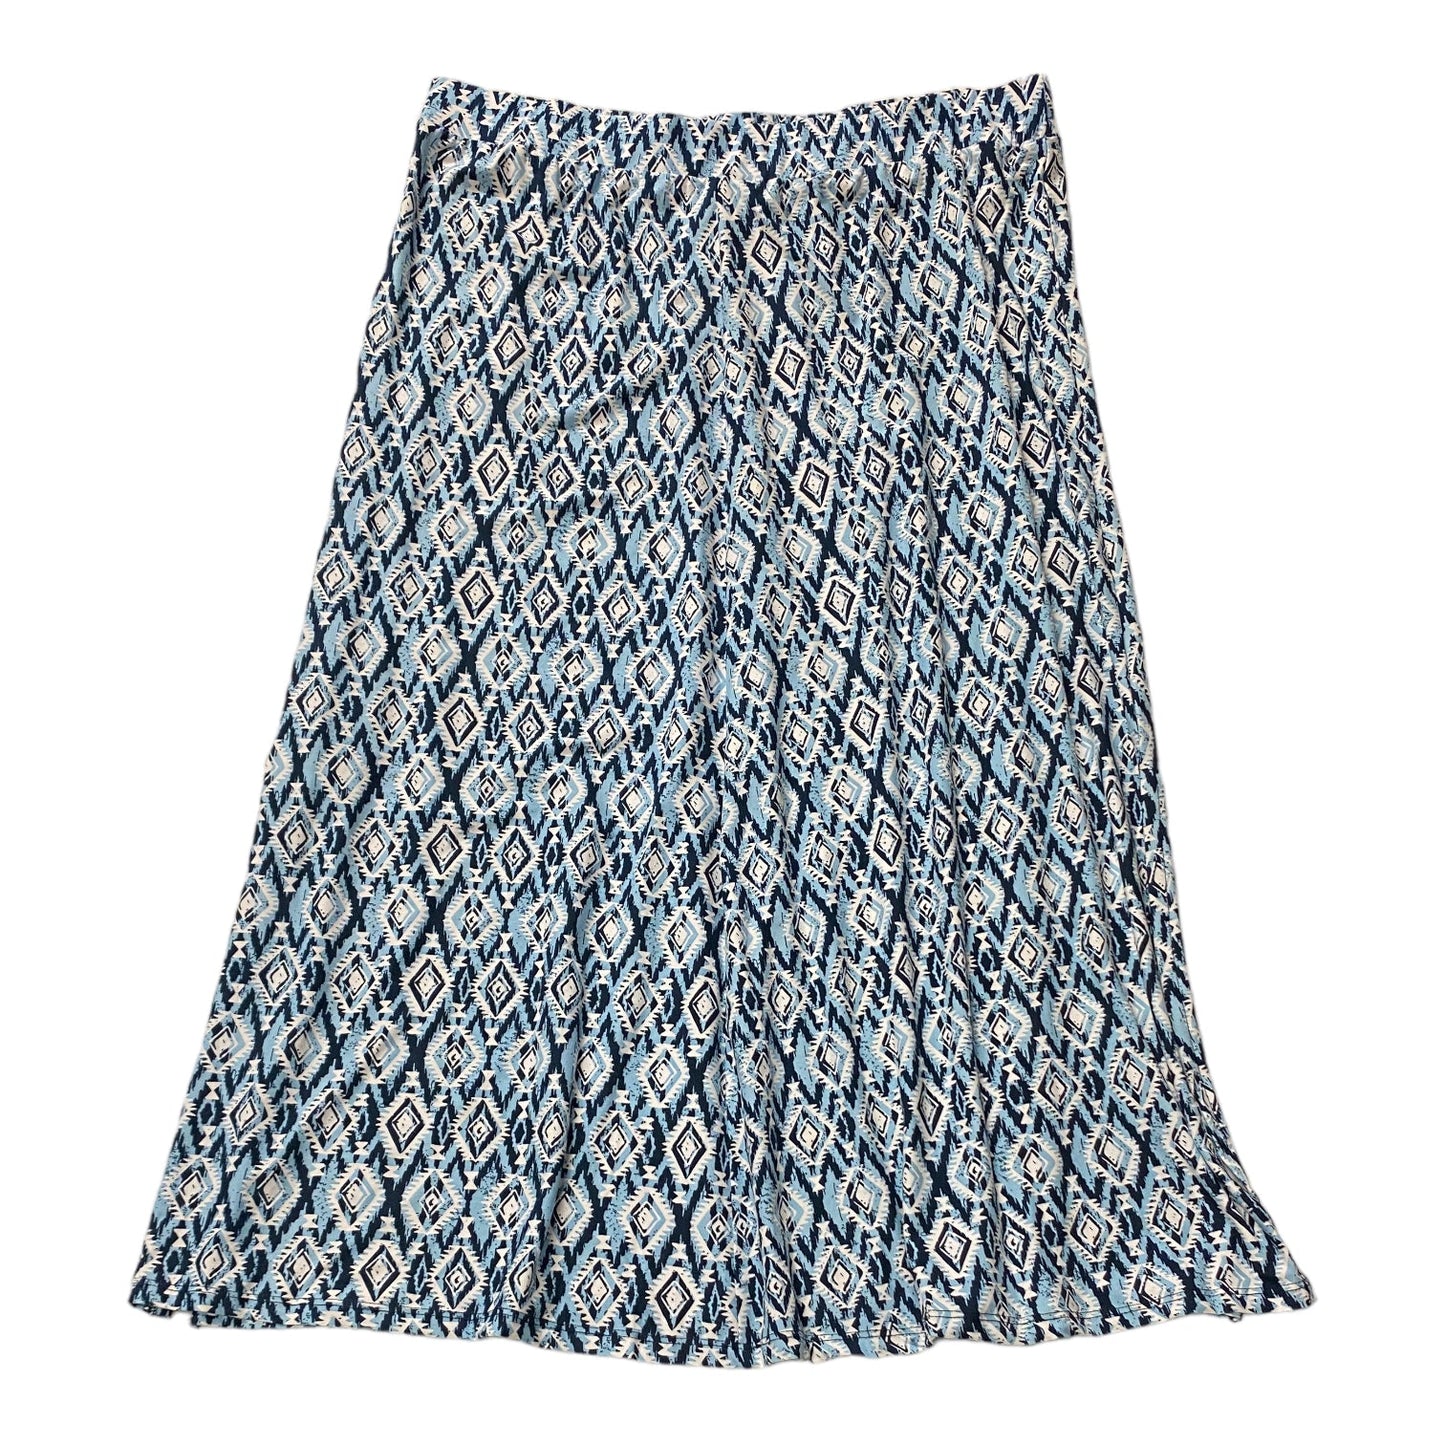 Skirt Maxi By Terra & Sky  Size: 2x